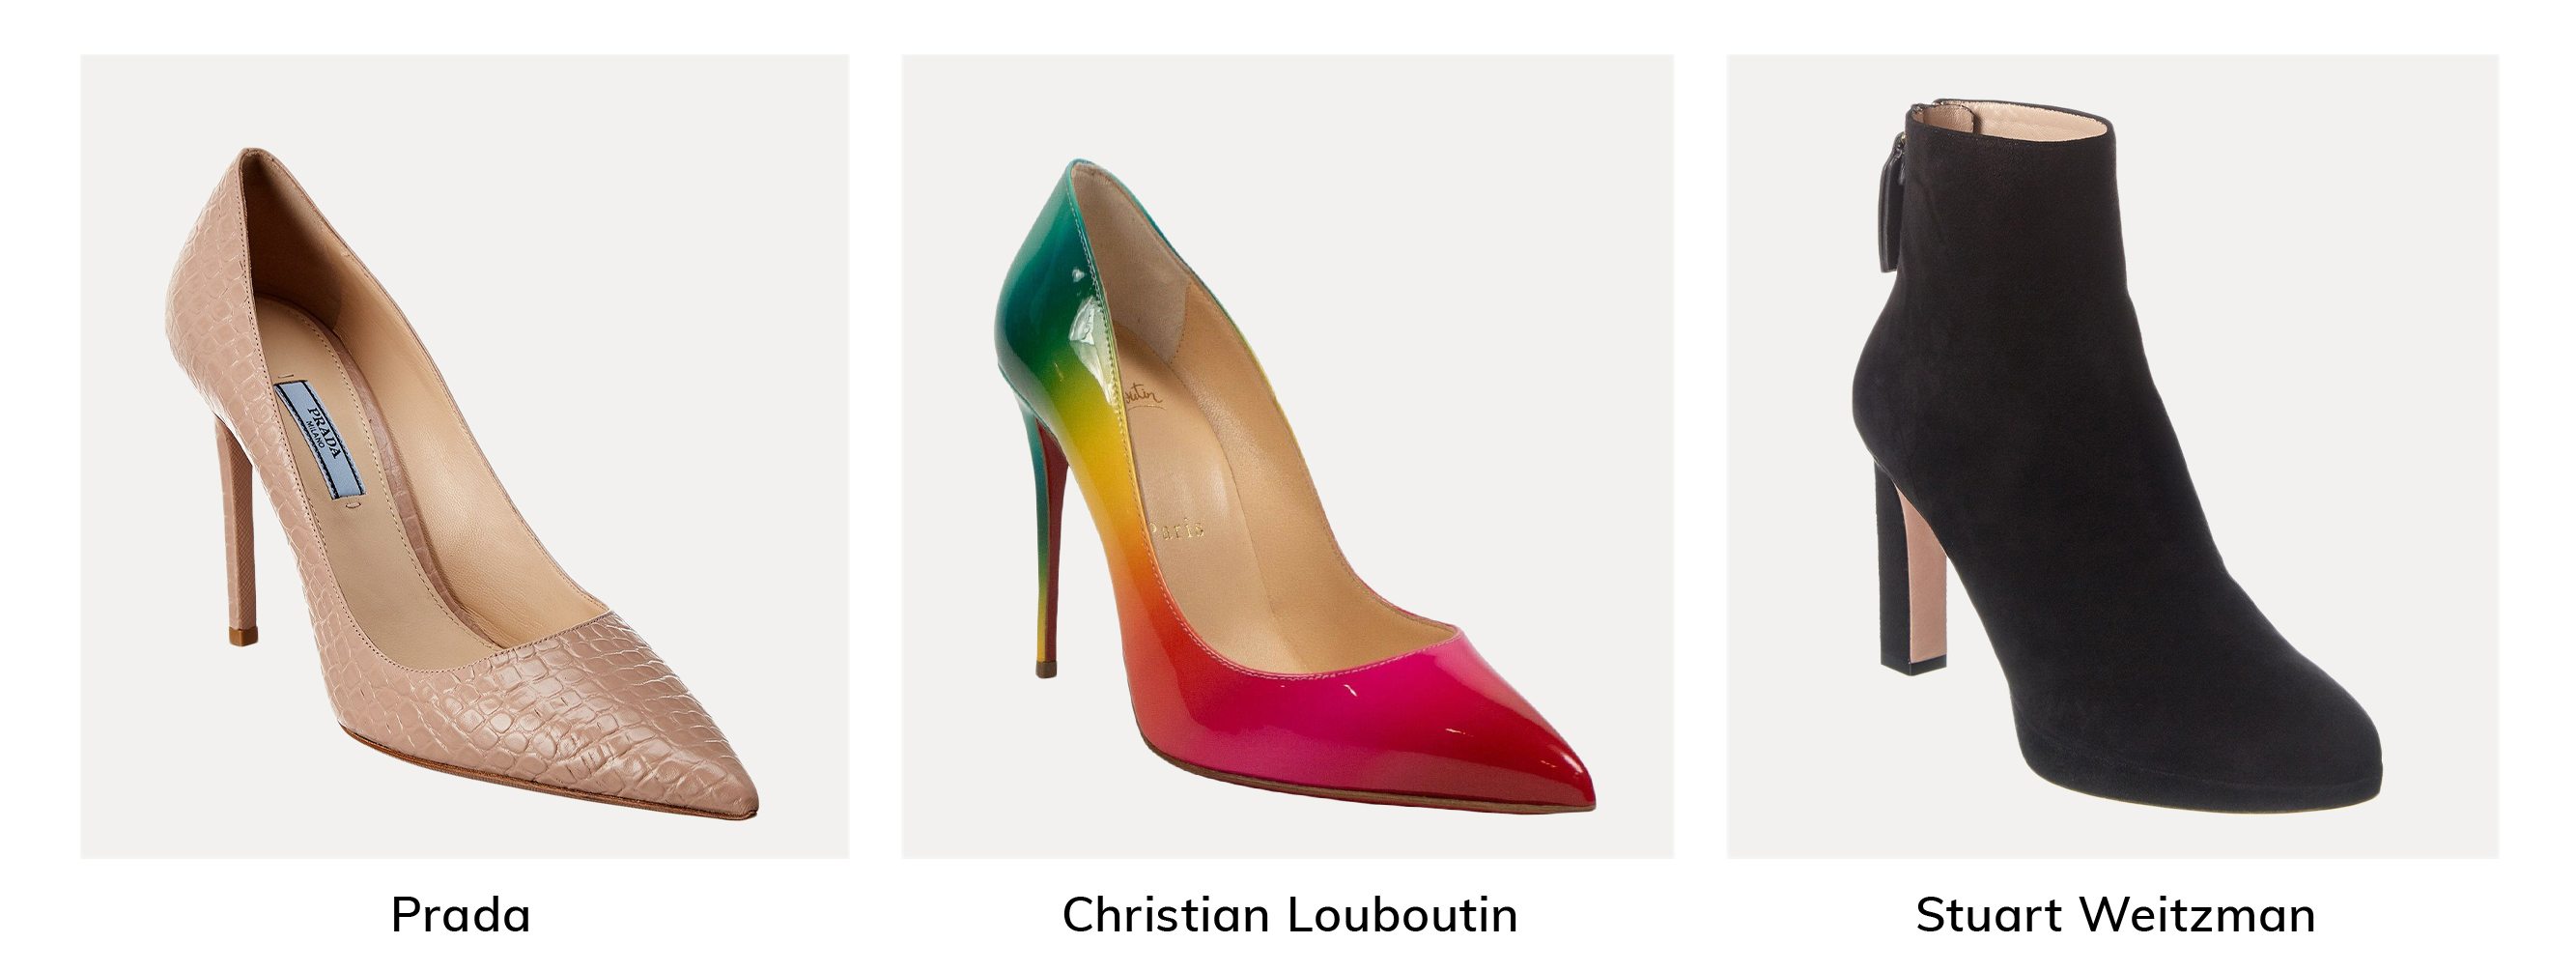 Prada, Christian Louboutin and Stuart Weitzman Shoes on Sale Now